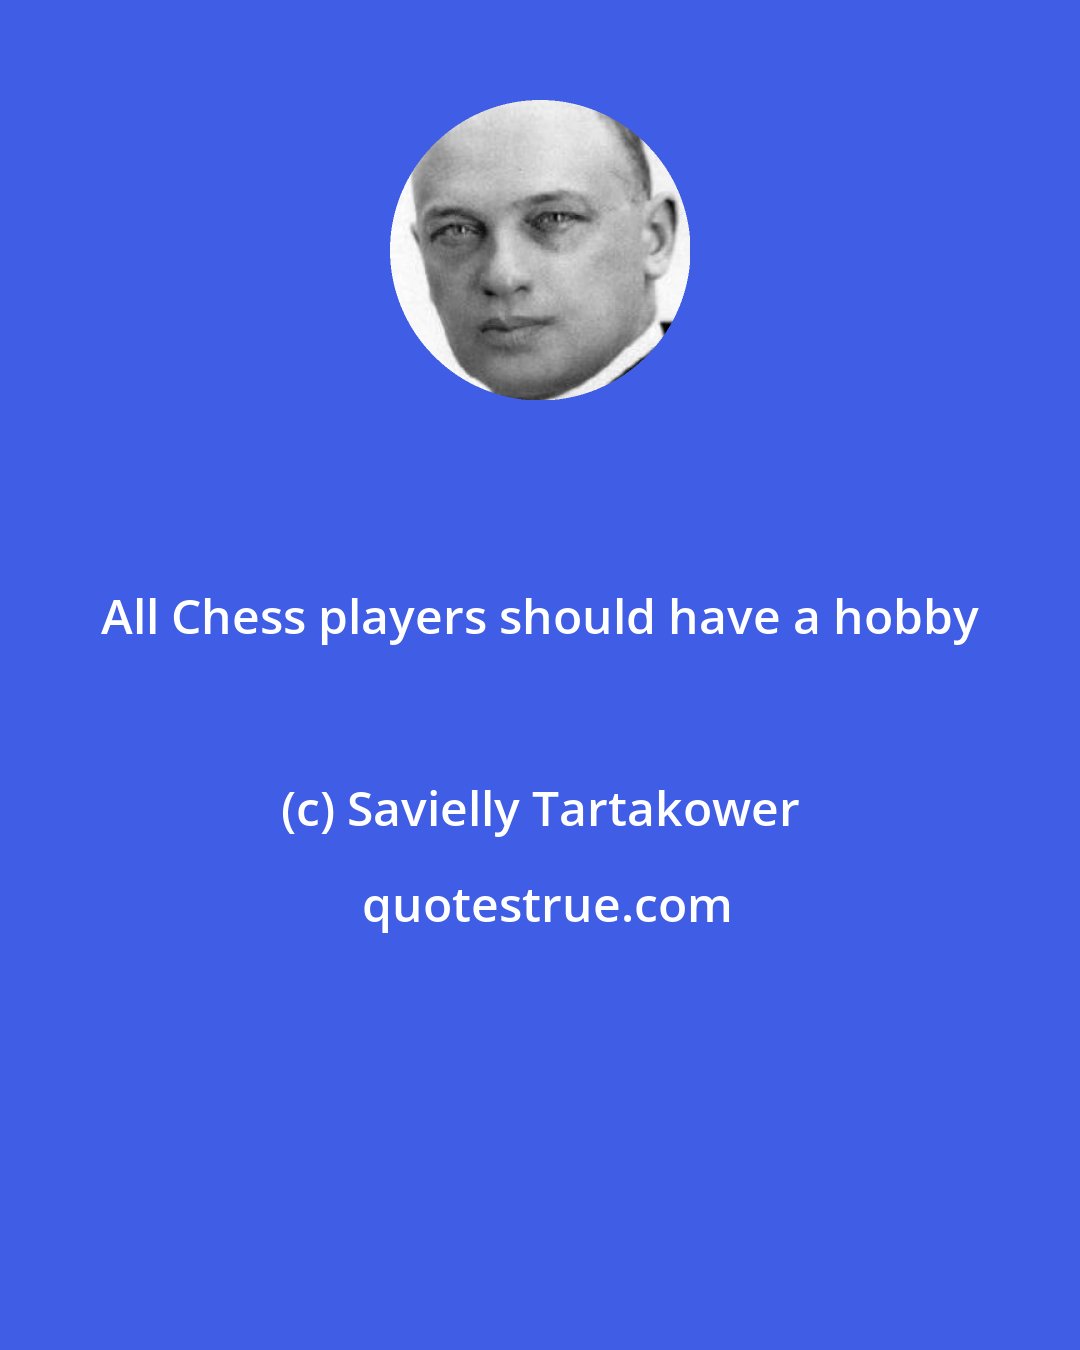 Savielly Tartakower: All Chess players should have a hobby